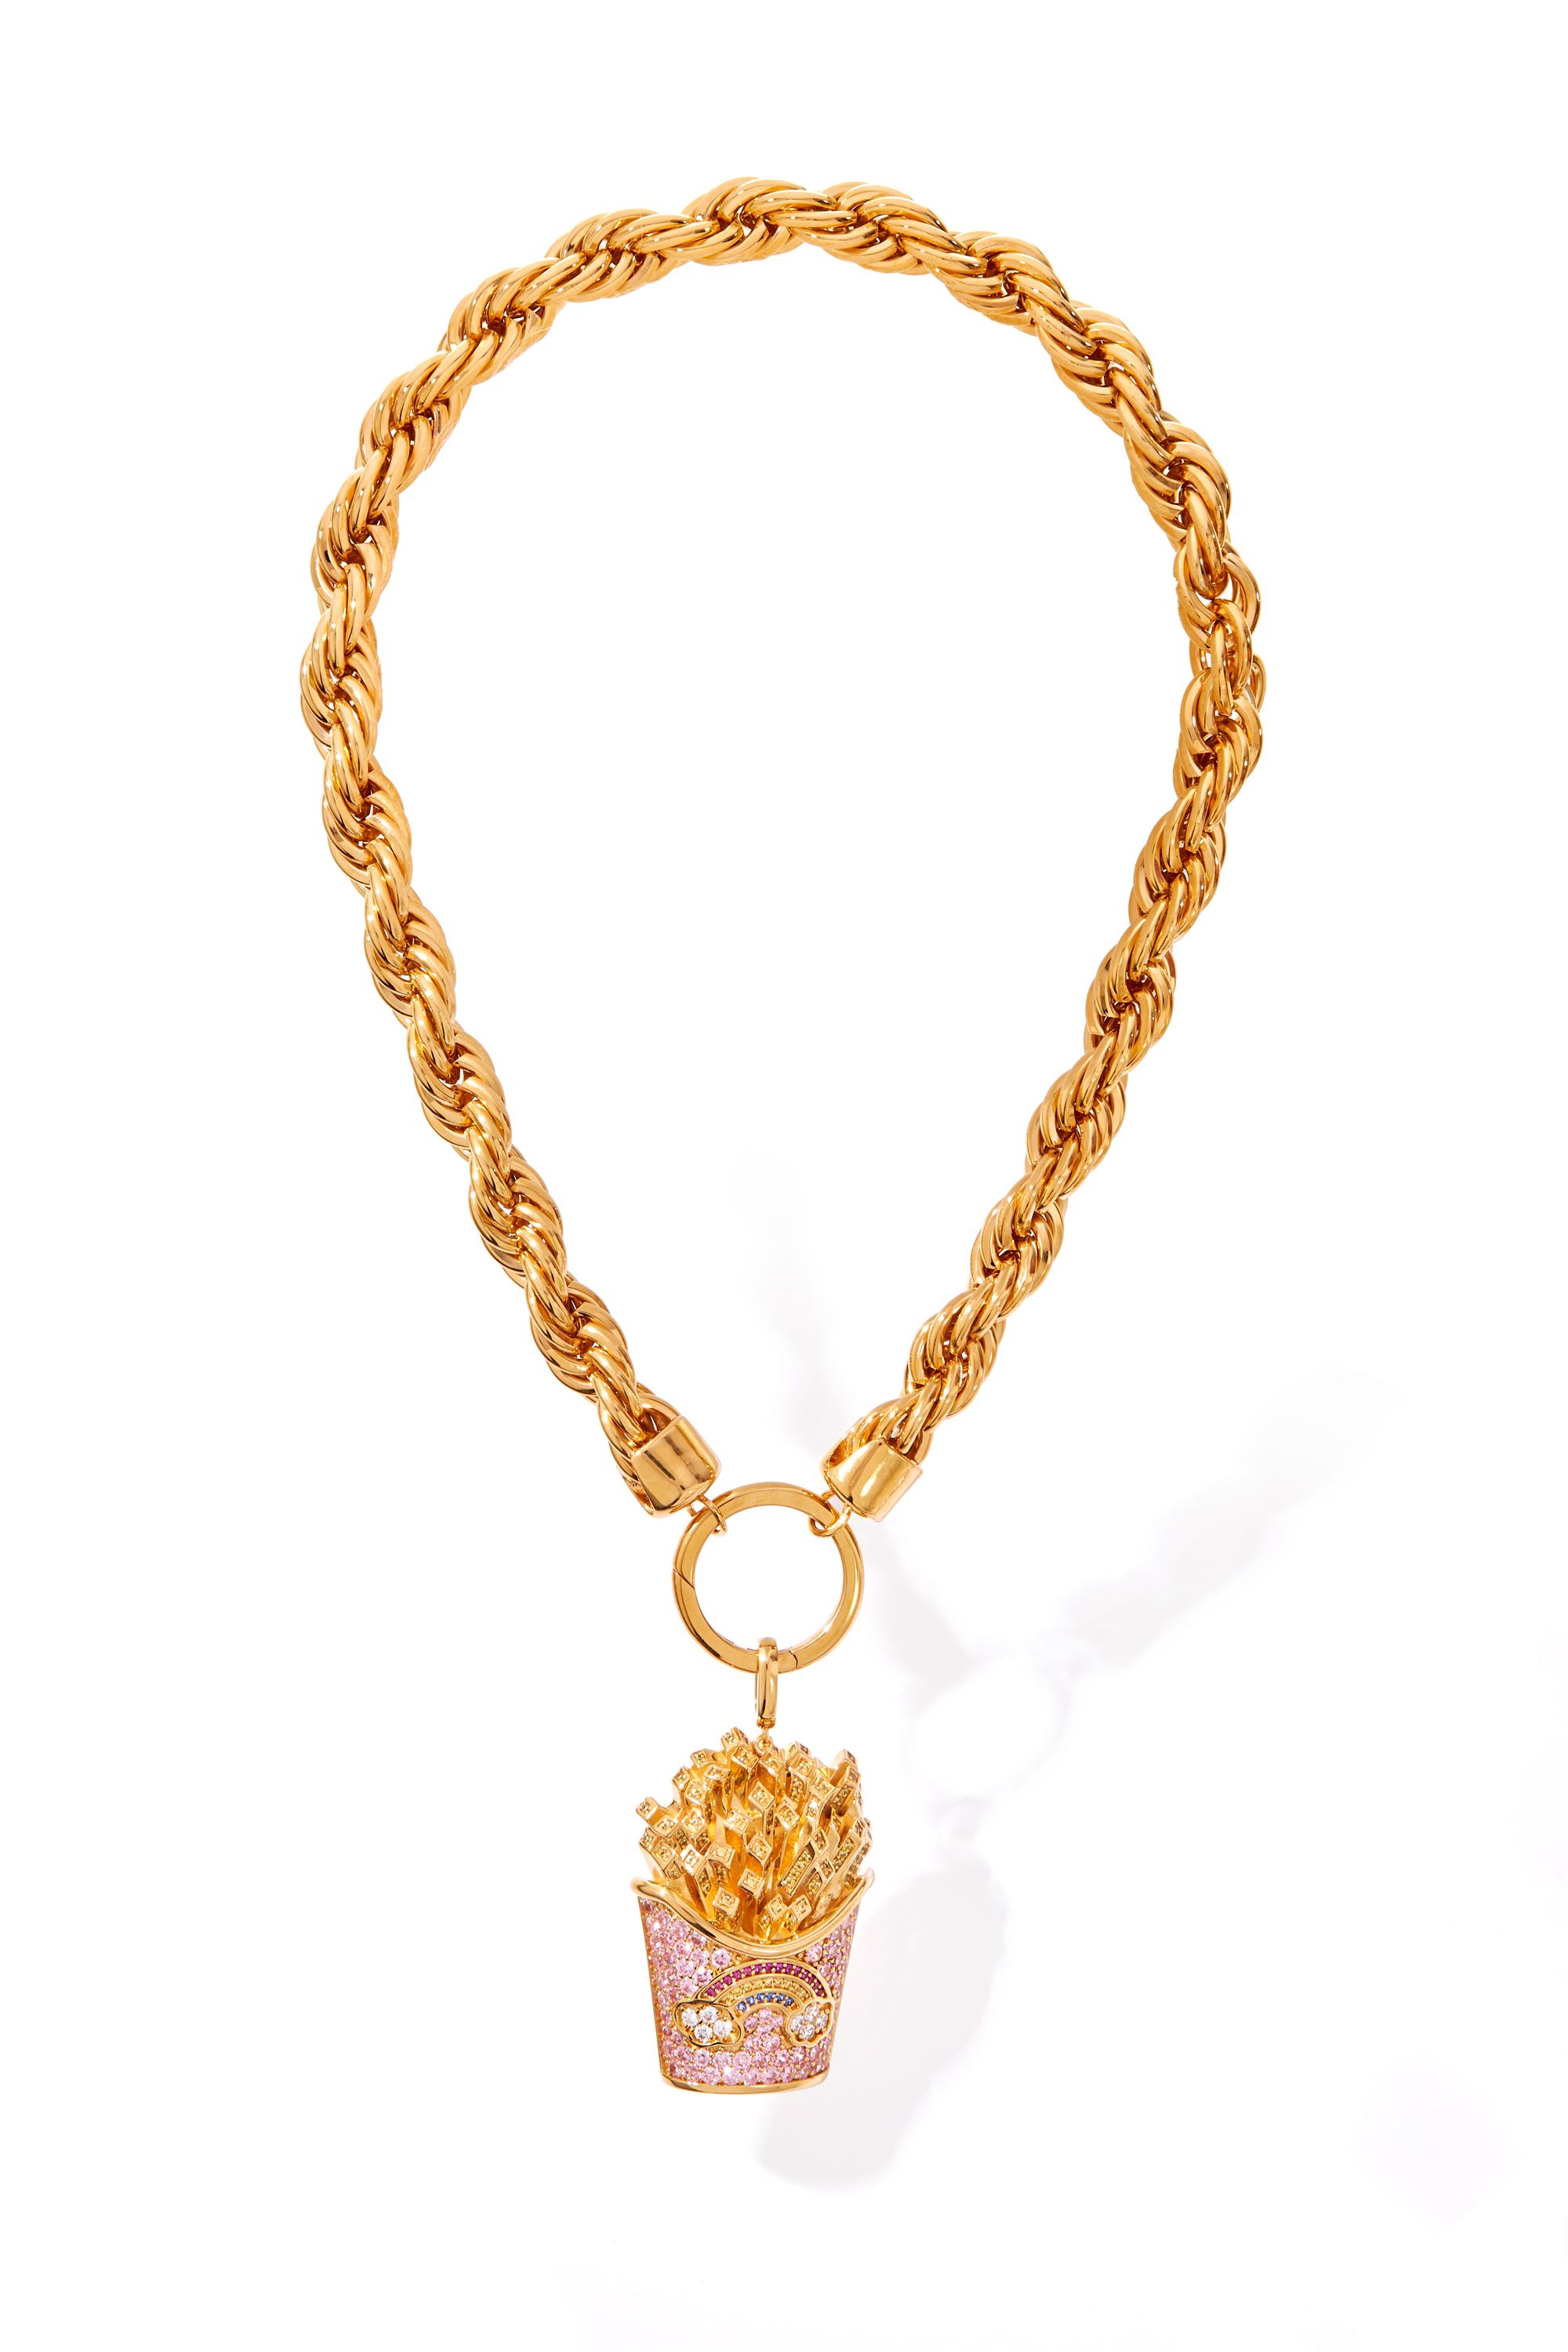 Dee Ocleppo Hilfiger Launches Judith Leiber Jewelry